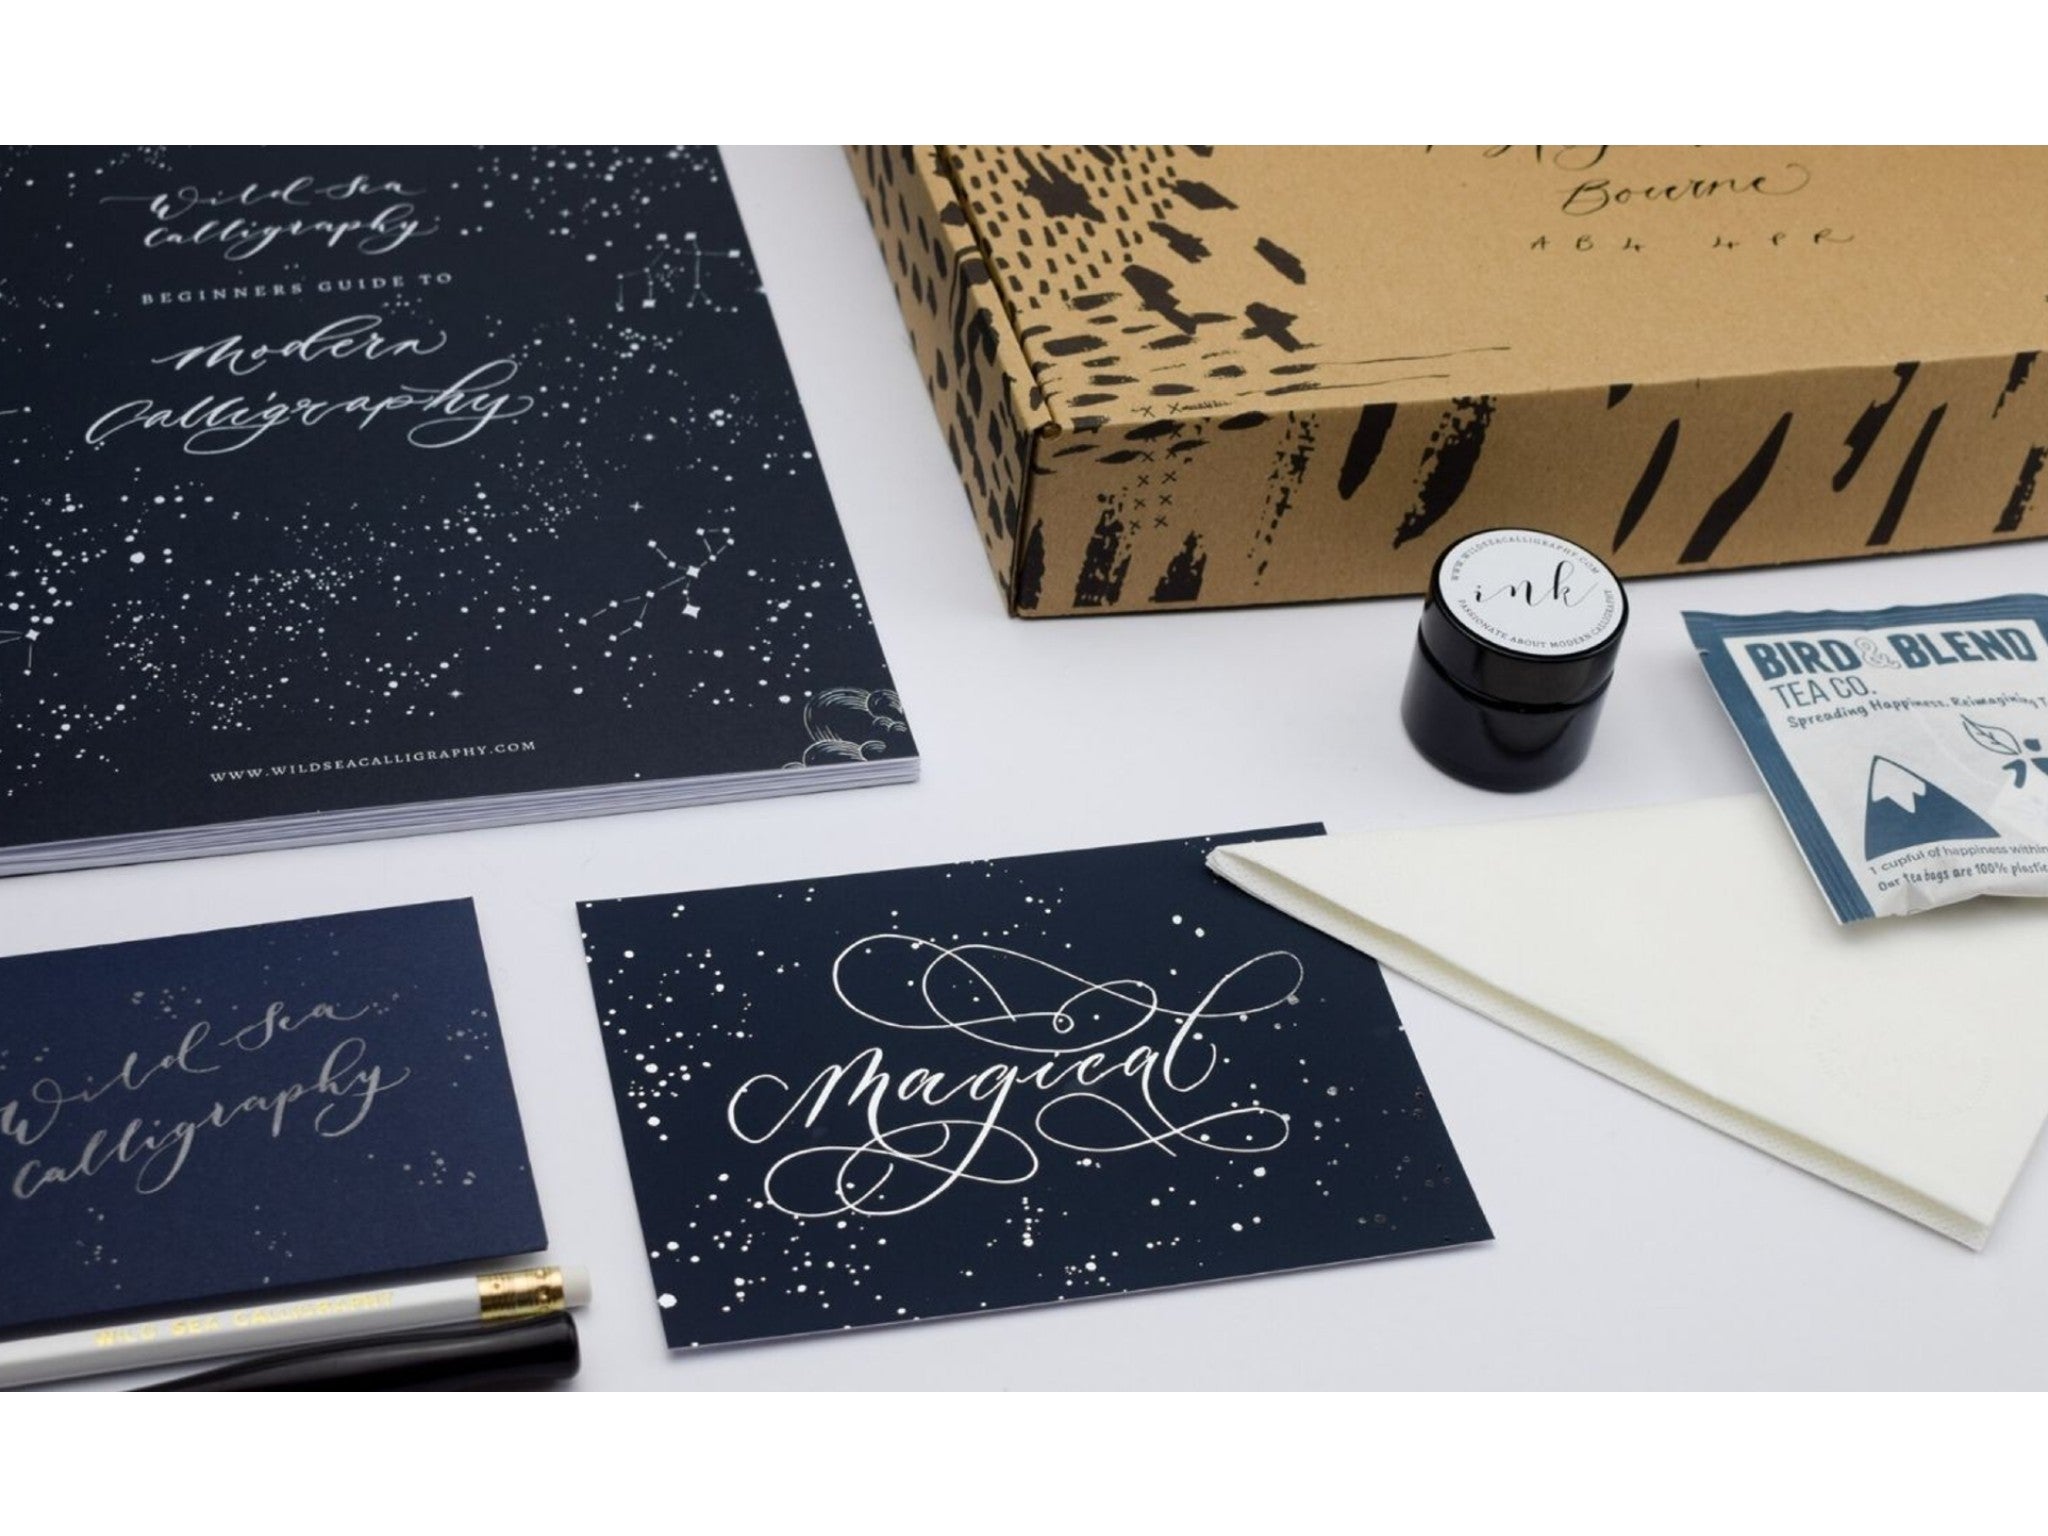 Wild Sea Calligraphy beginners modern calligraphy kit & online workshop indybest.jpeg